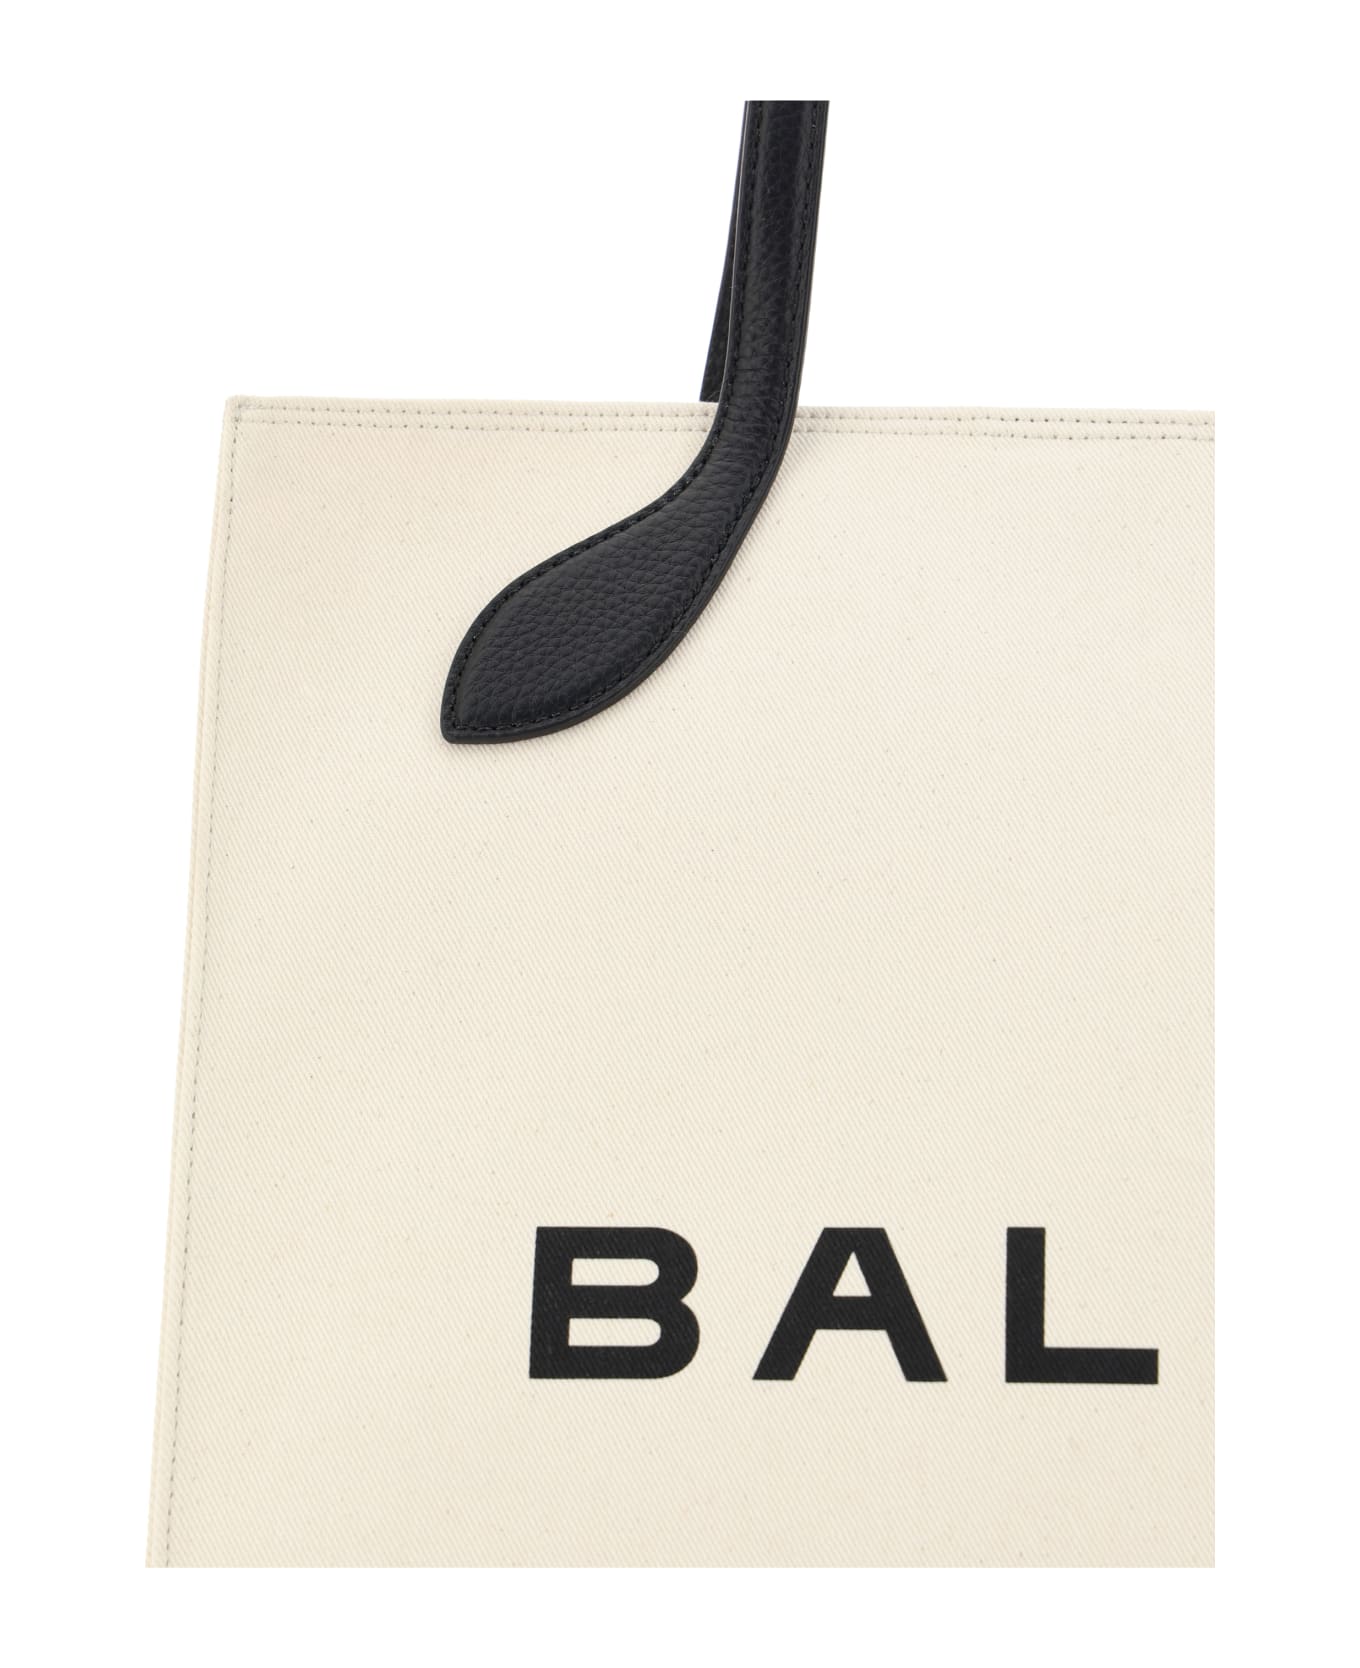 Bally Tote Handbag - White